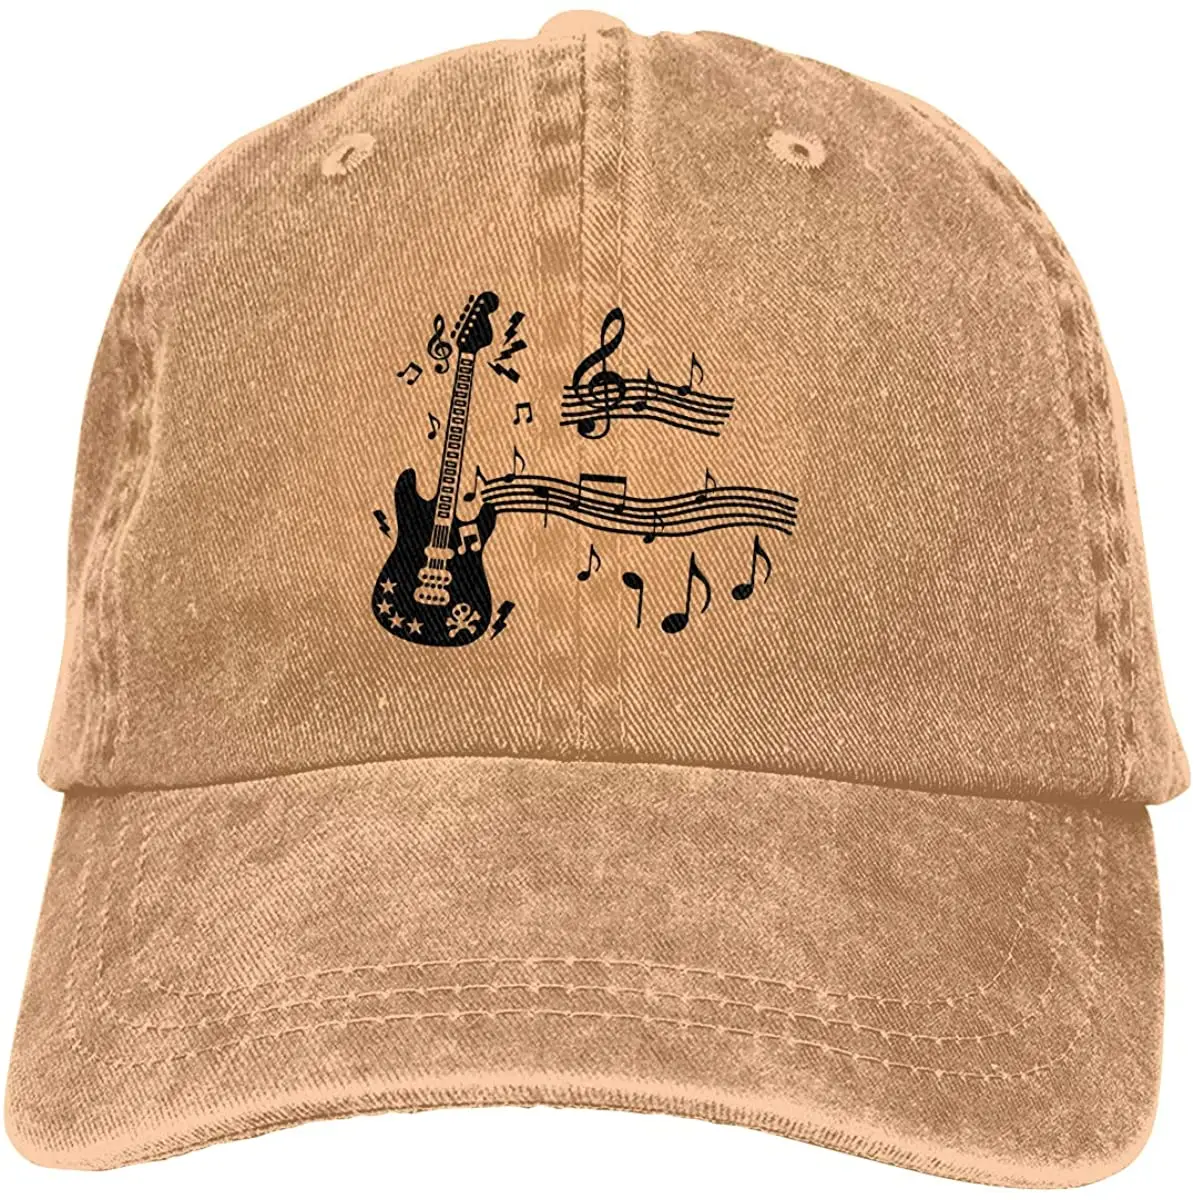 

Guitar and Music Notes Unisex Soft Casquette Cap Fashion Hat Vintage Adjustable Baseball Caps